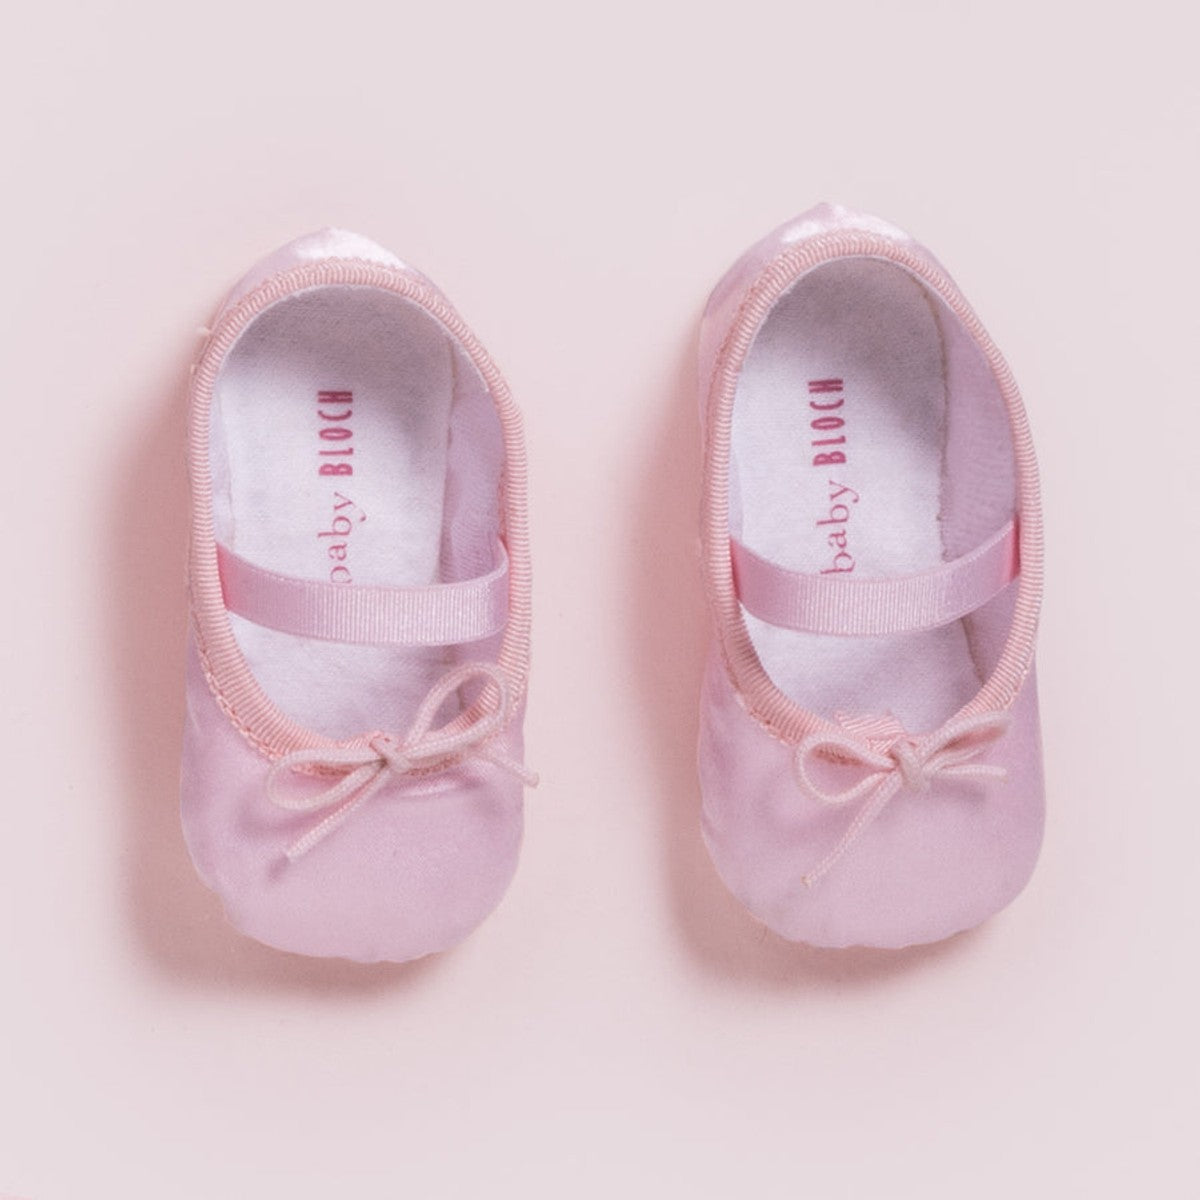 Bloch 'Baby Bloch' Ballerina Shoes BB2180